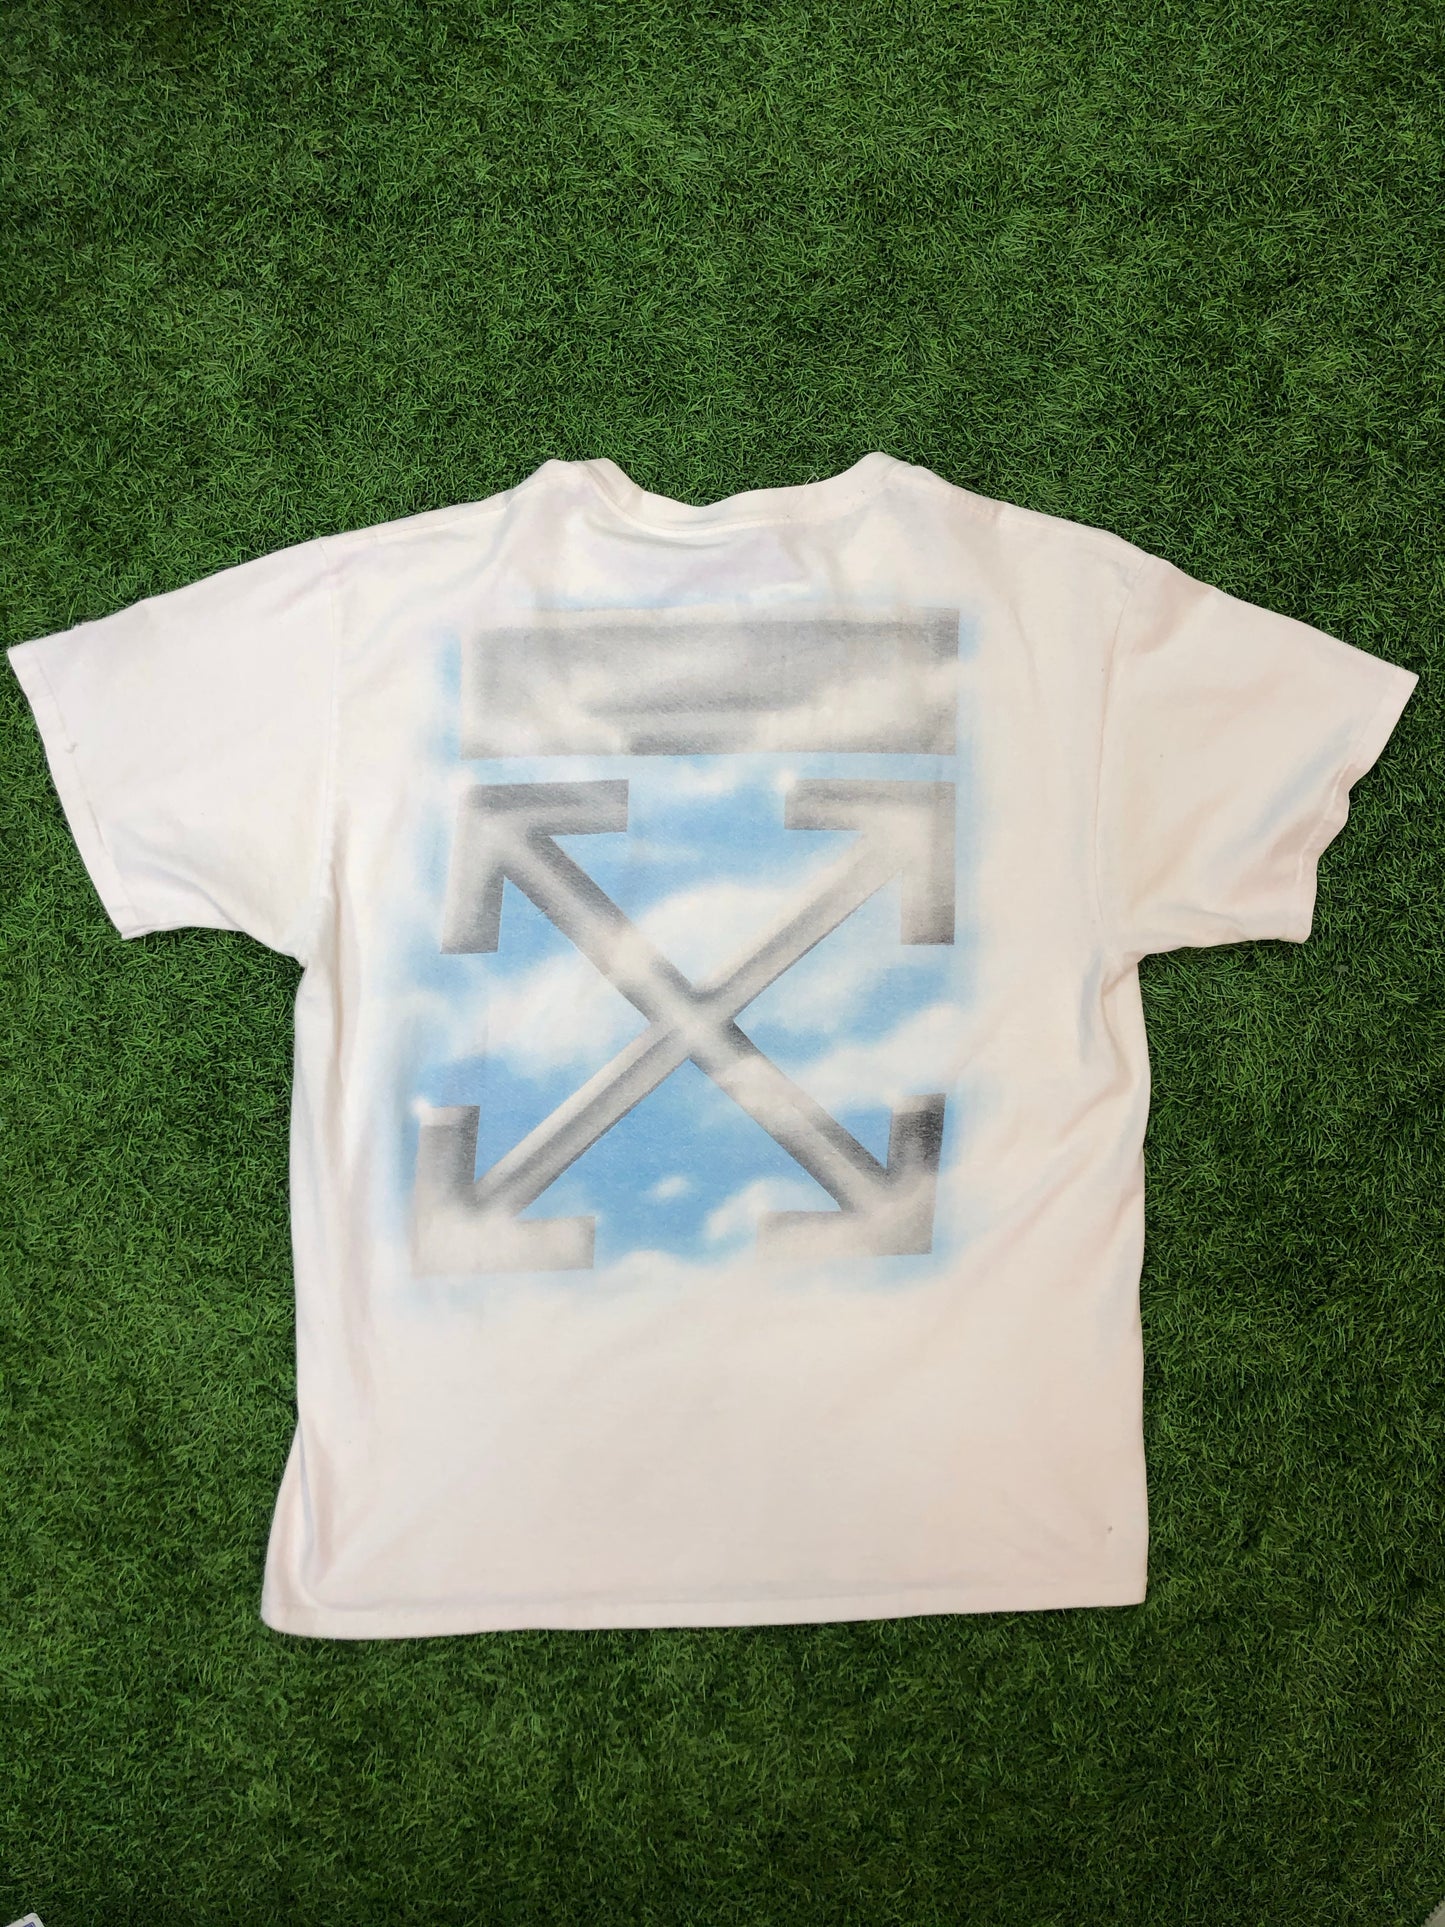 Off-White x Yams Days Heaven T-Shirt